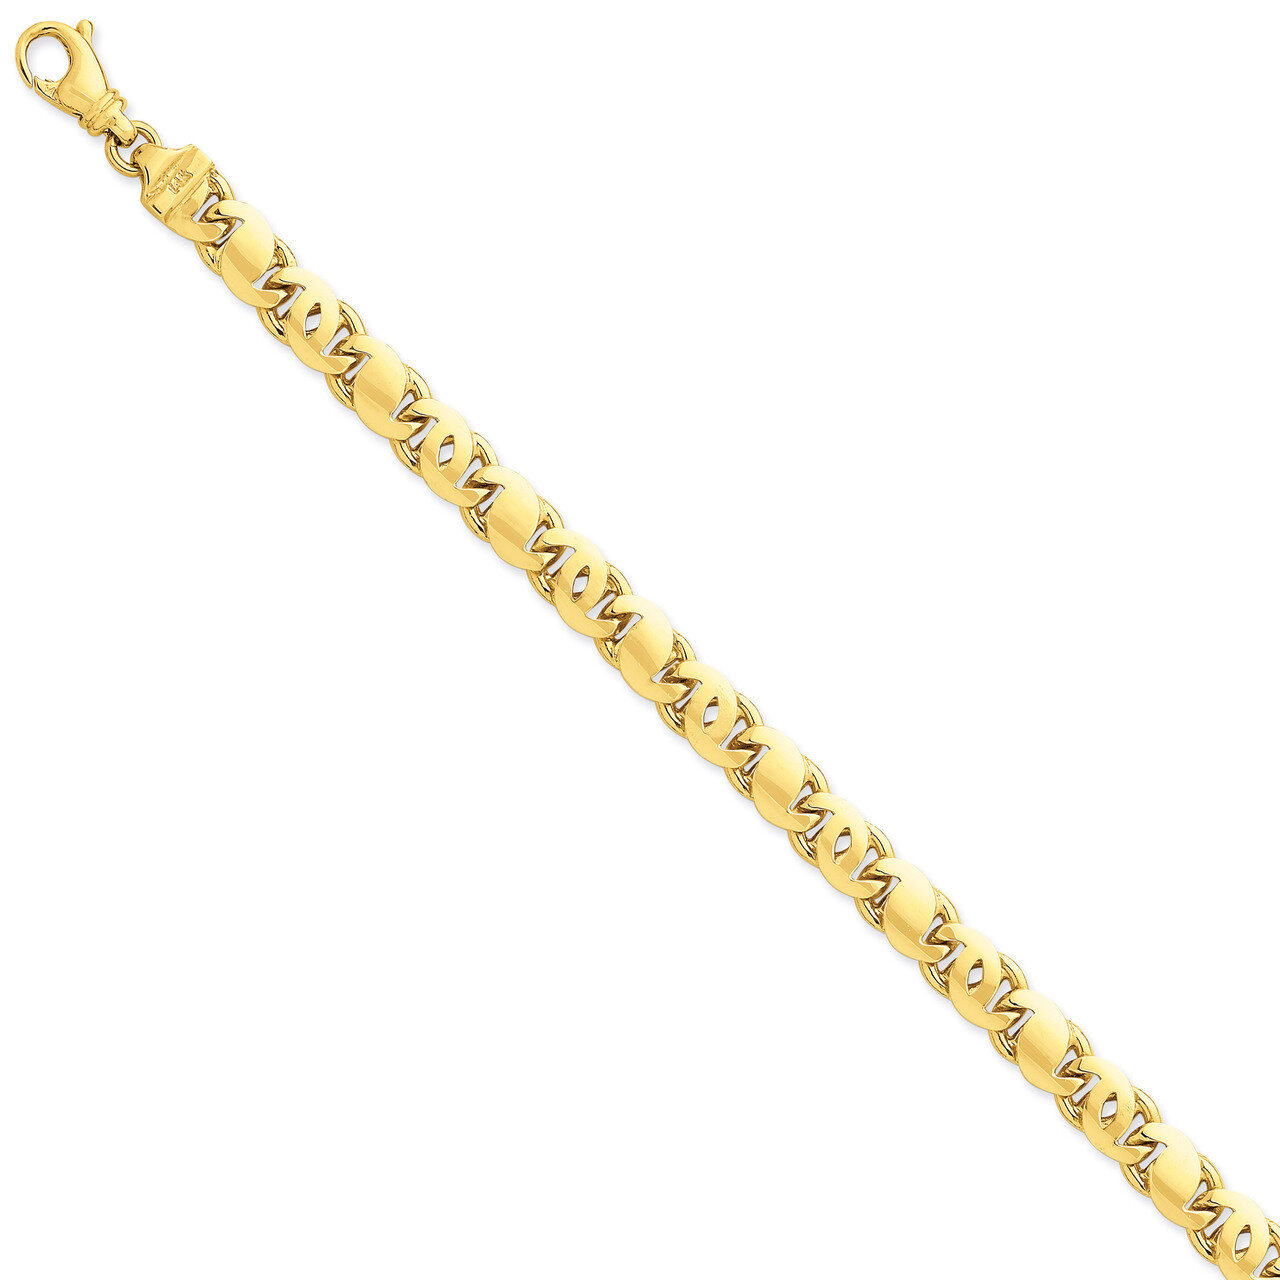 Fancy S-Link Chain 22 Inch 14k Gold Polished LK675-22